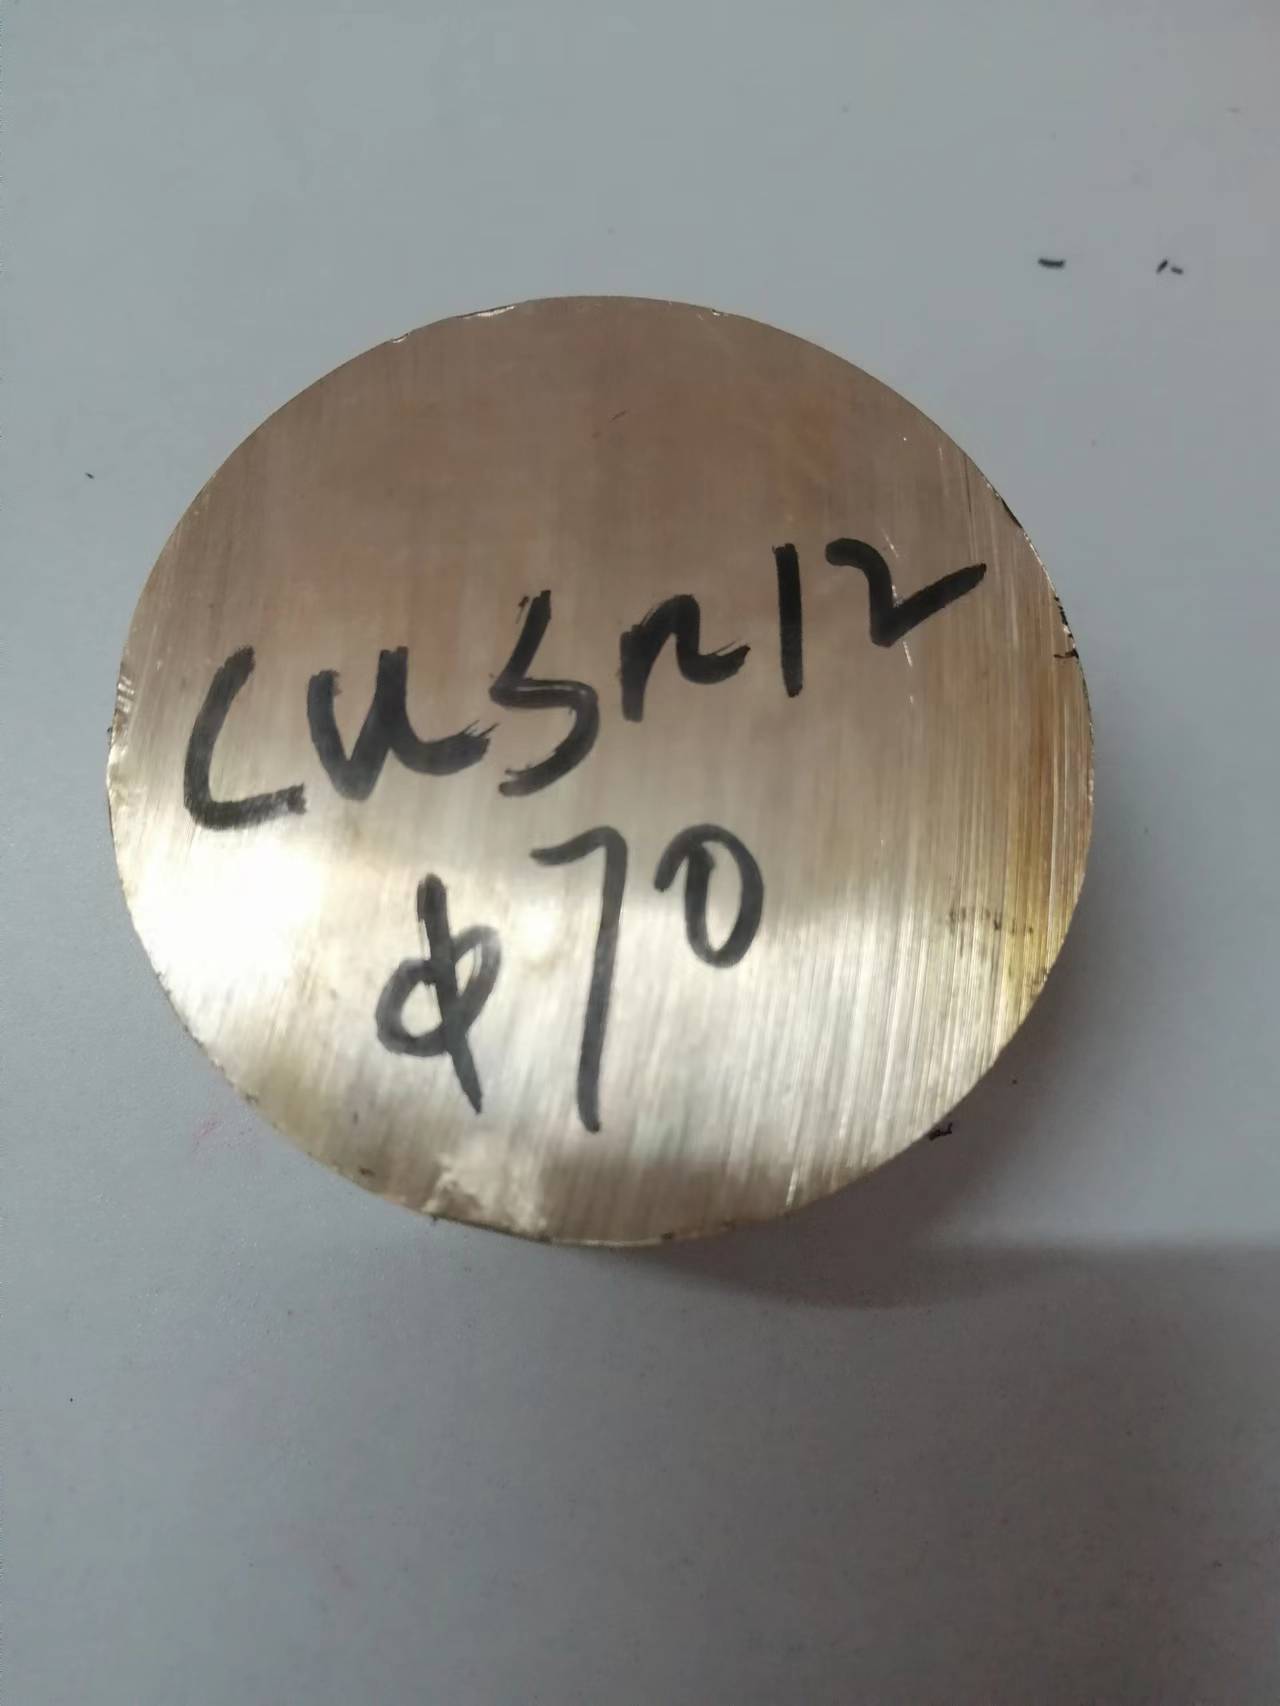 CuSn12-C铜合金